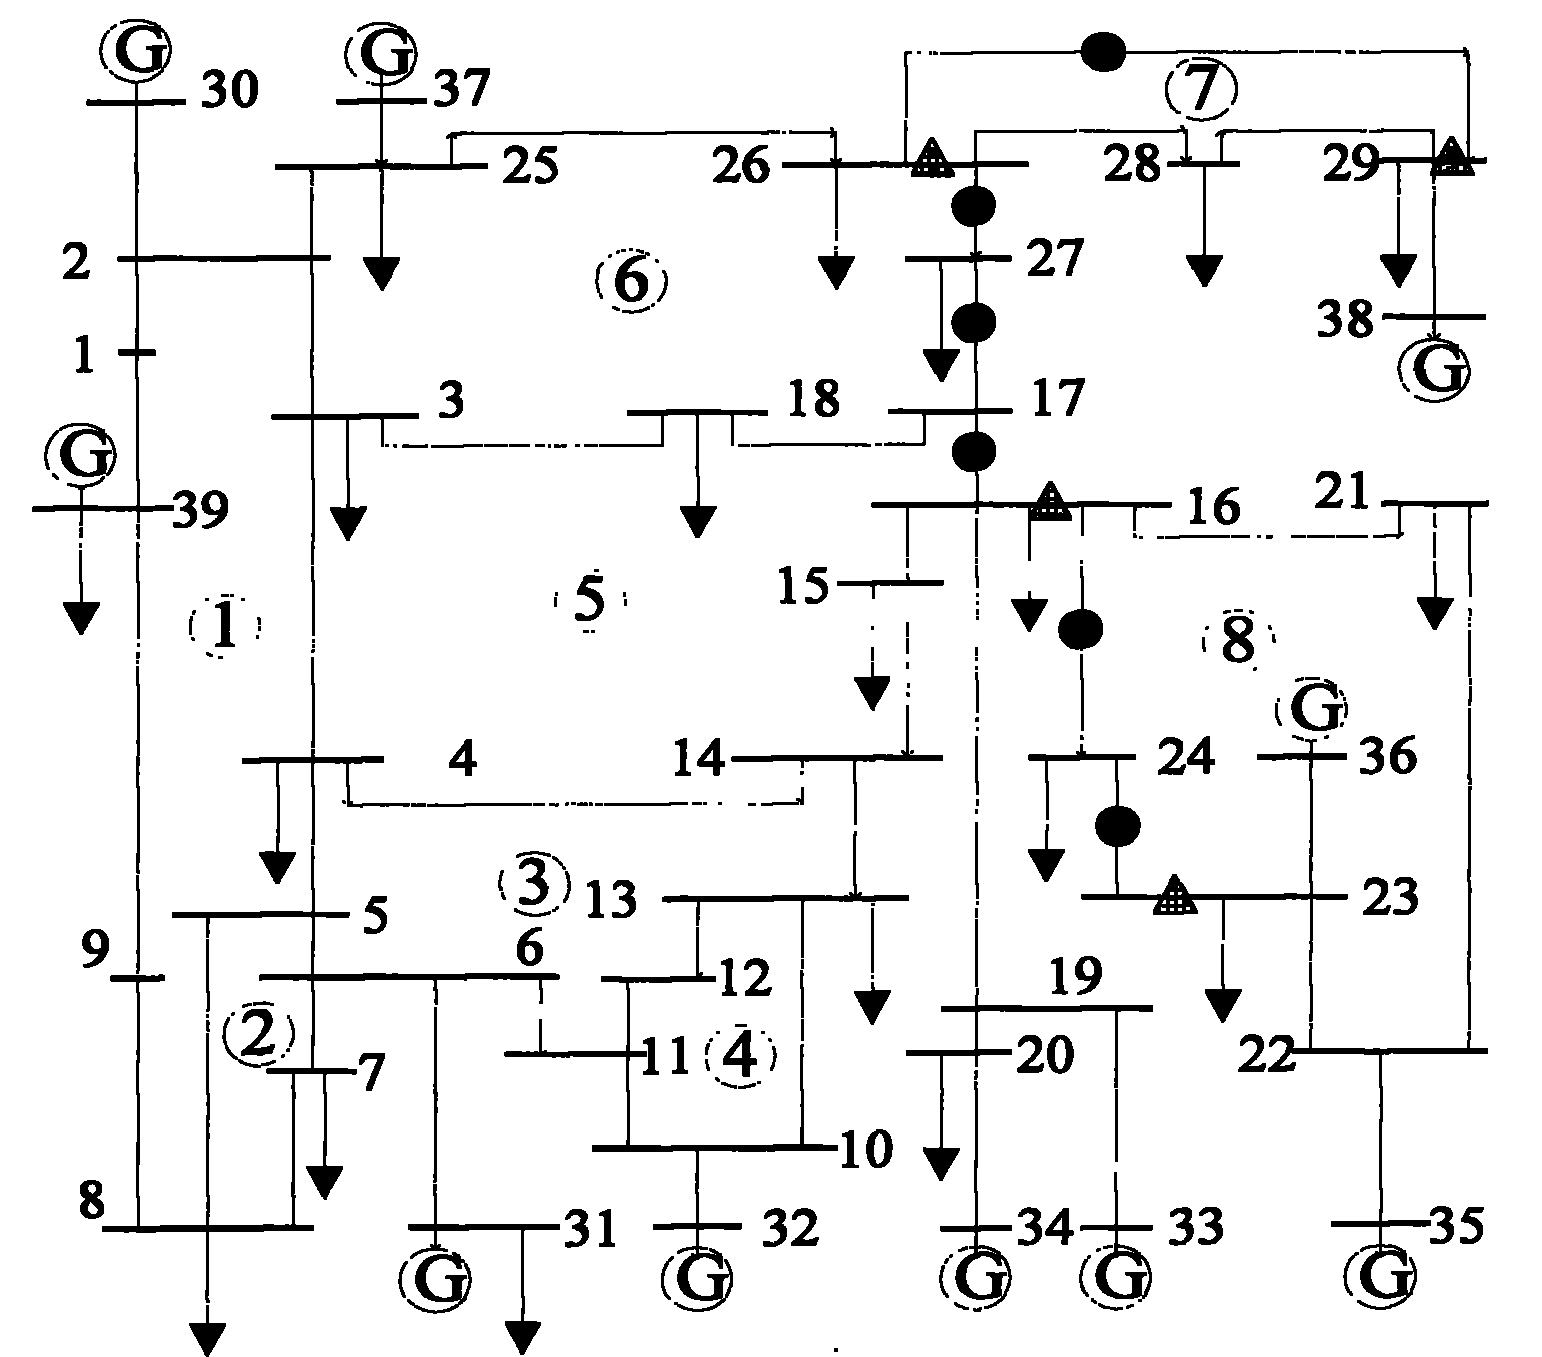 Electricity transmission network reactor parameter estimation method in scheduling energy management system